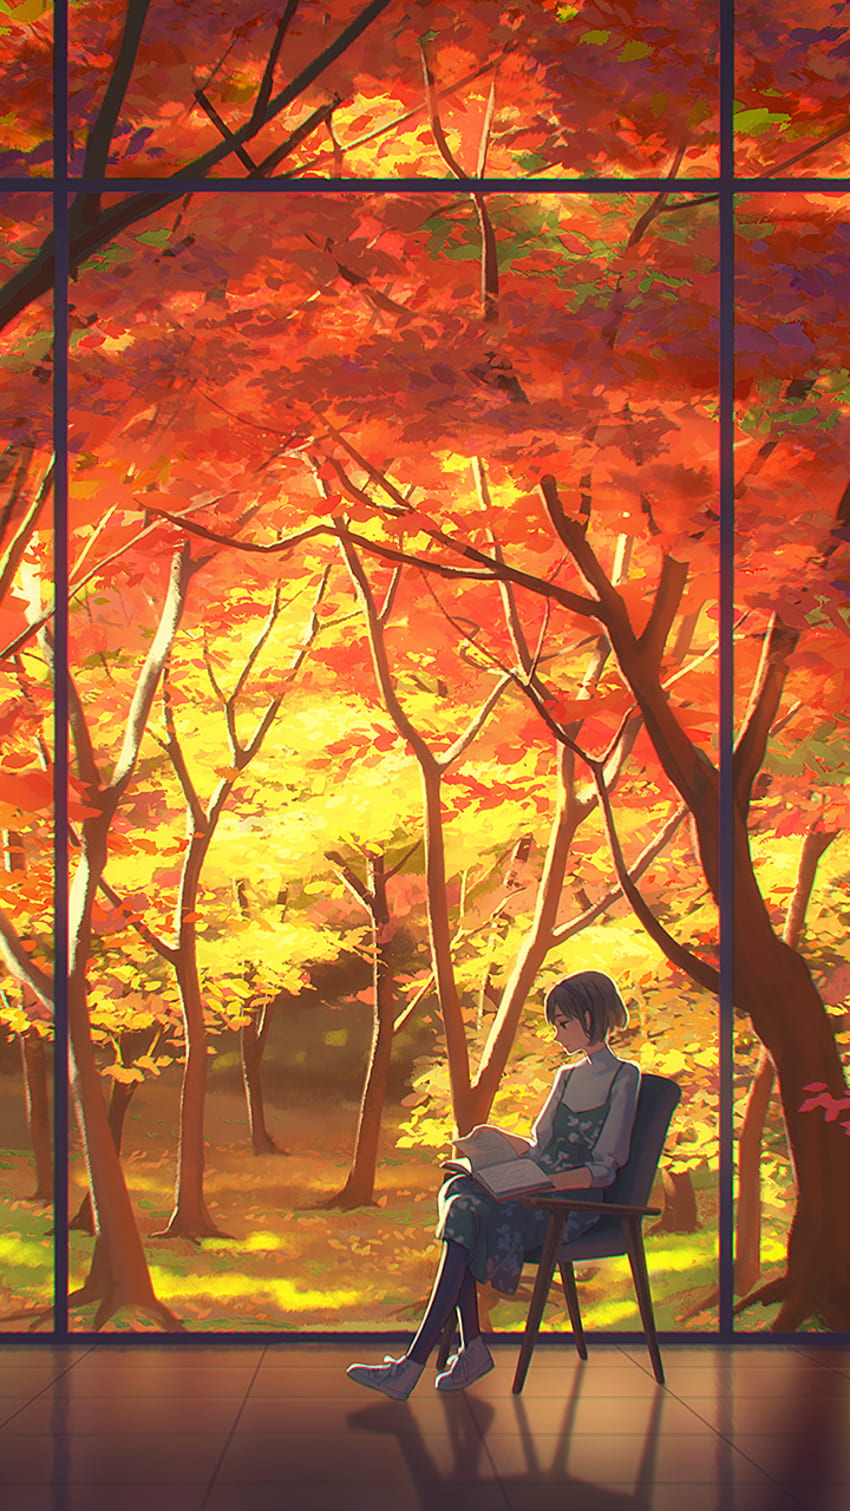 Wallpaper anime boy autumn tree artwork desktop wallpaper hd image  picture background 6c12f3  wallpapersmug